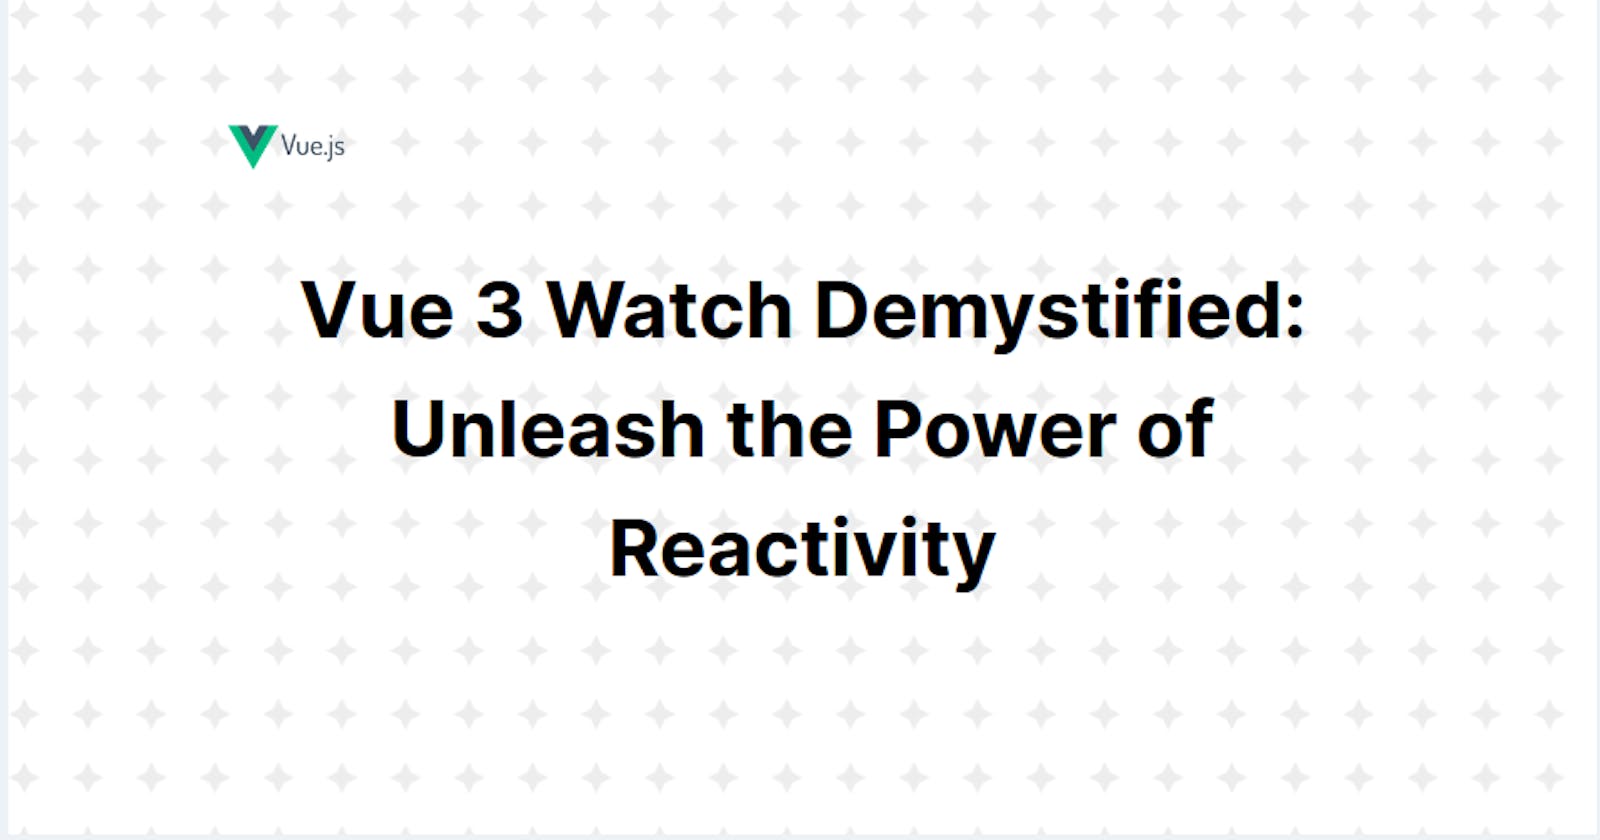 Vue 3 Watch Demystified: Unleash the Power of Reactivity